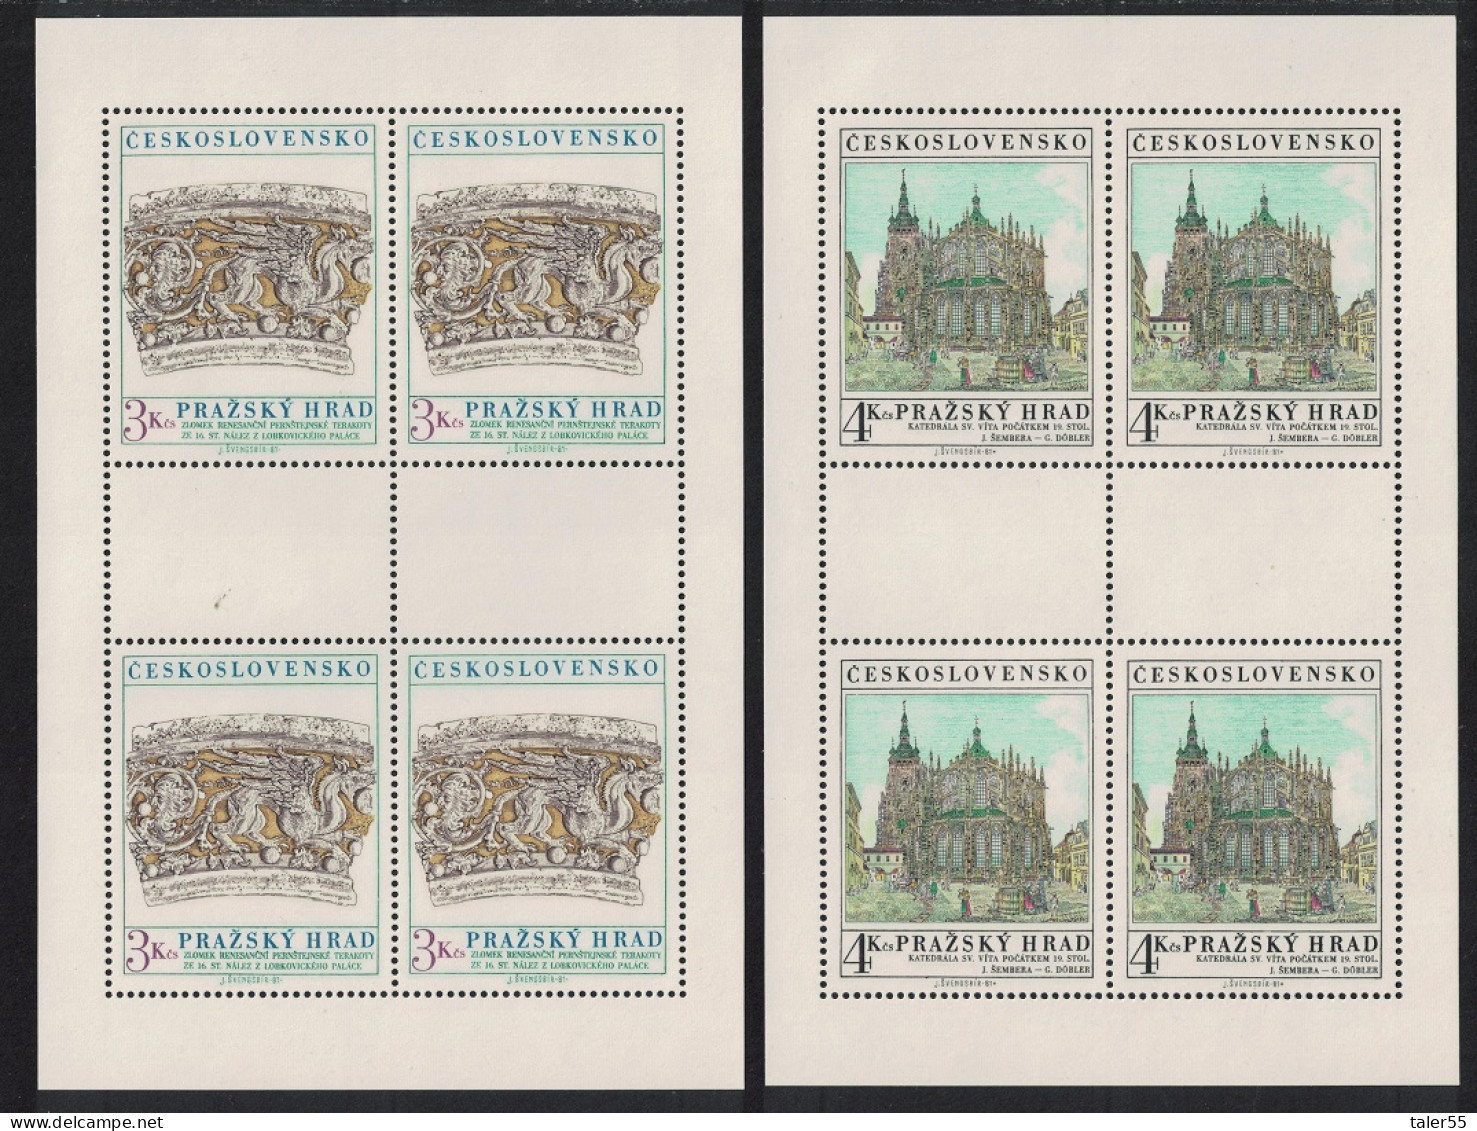 Czechoslovakia Prague Castle 17th Series 2 Sheetlets 1981 MNH SG#2599-2600 - Unused Stamps